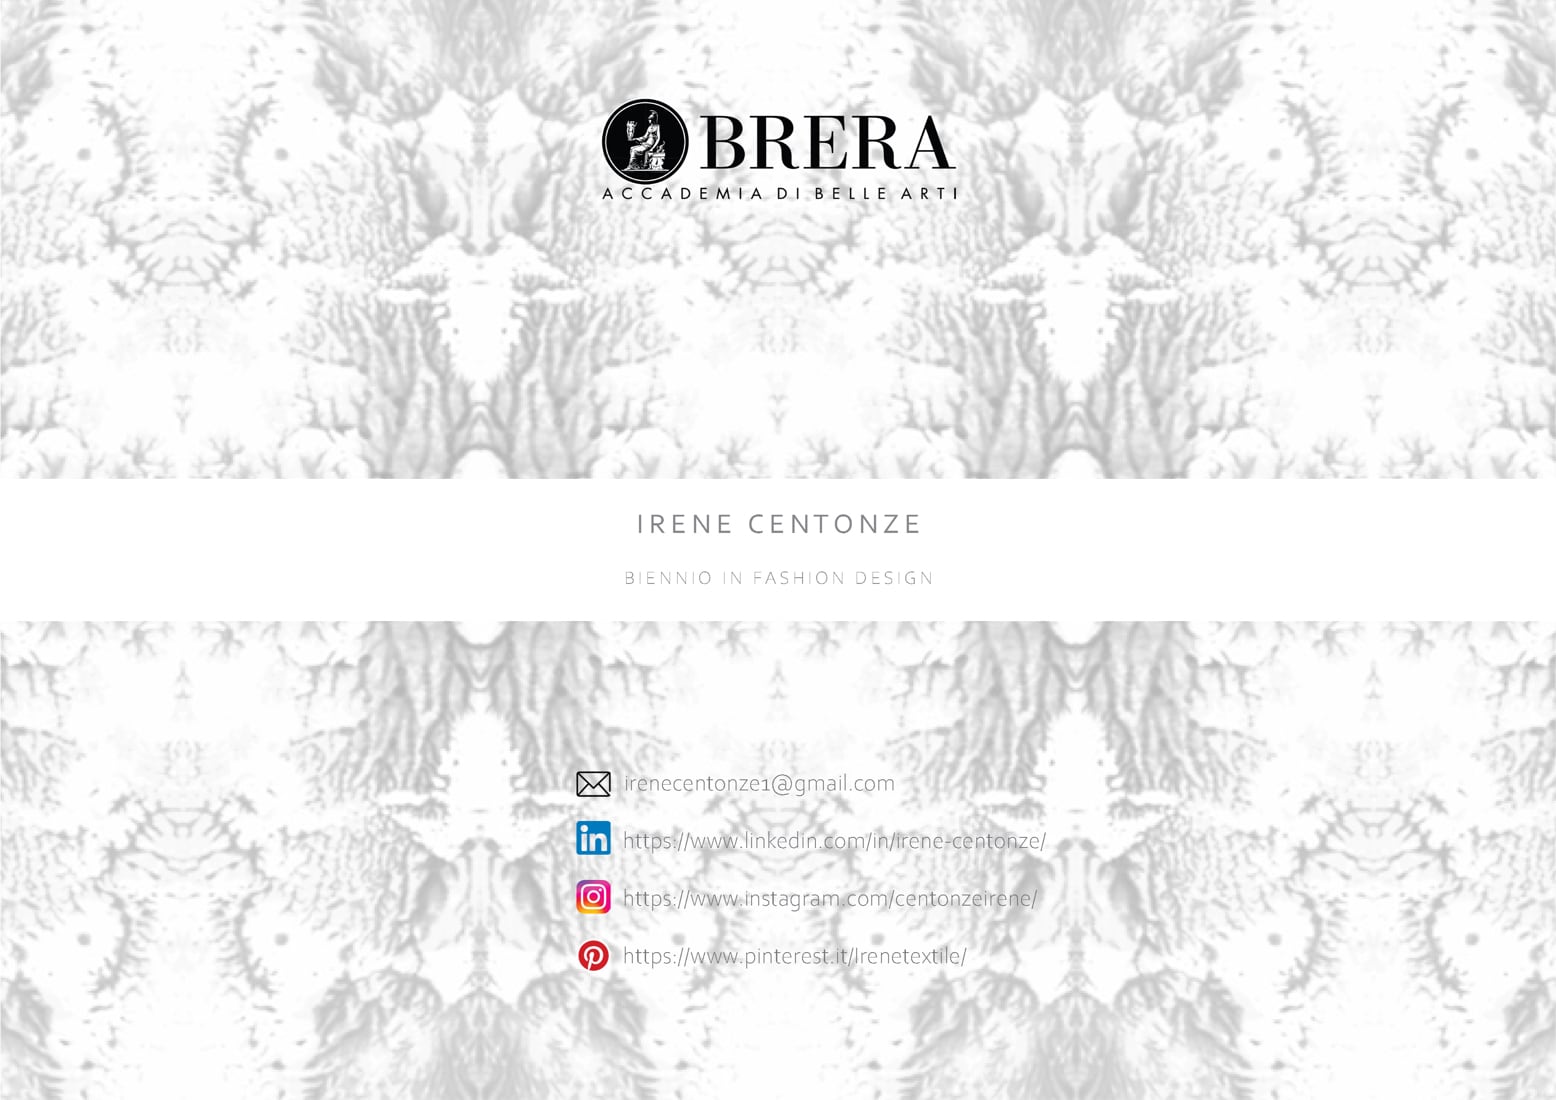 Irene Centonze_Brera_portfolio hub_Página_01